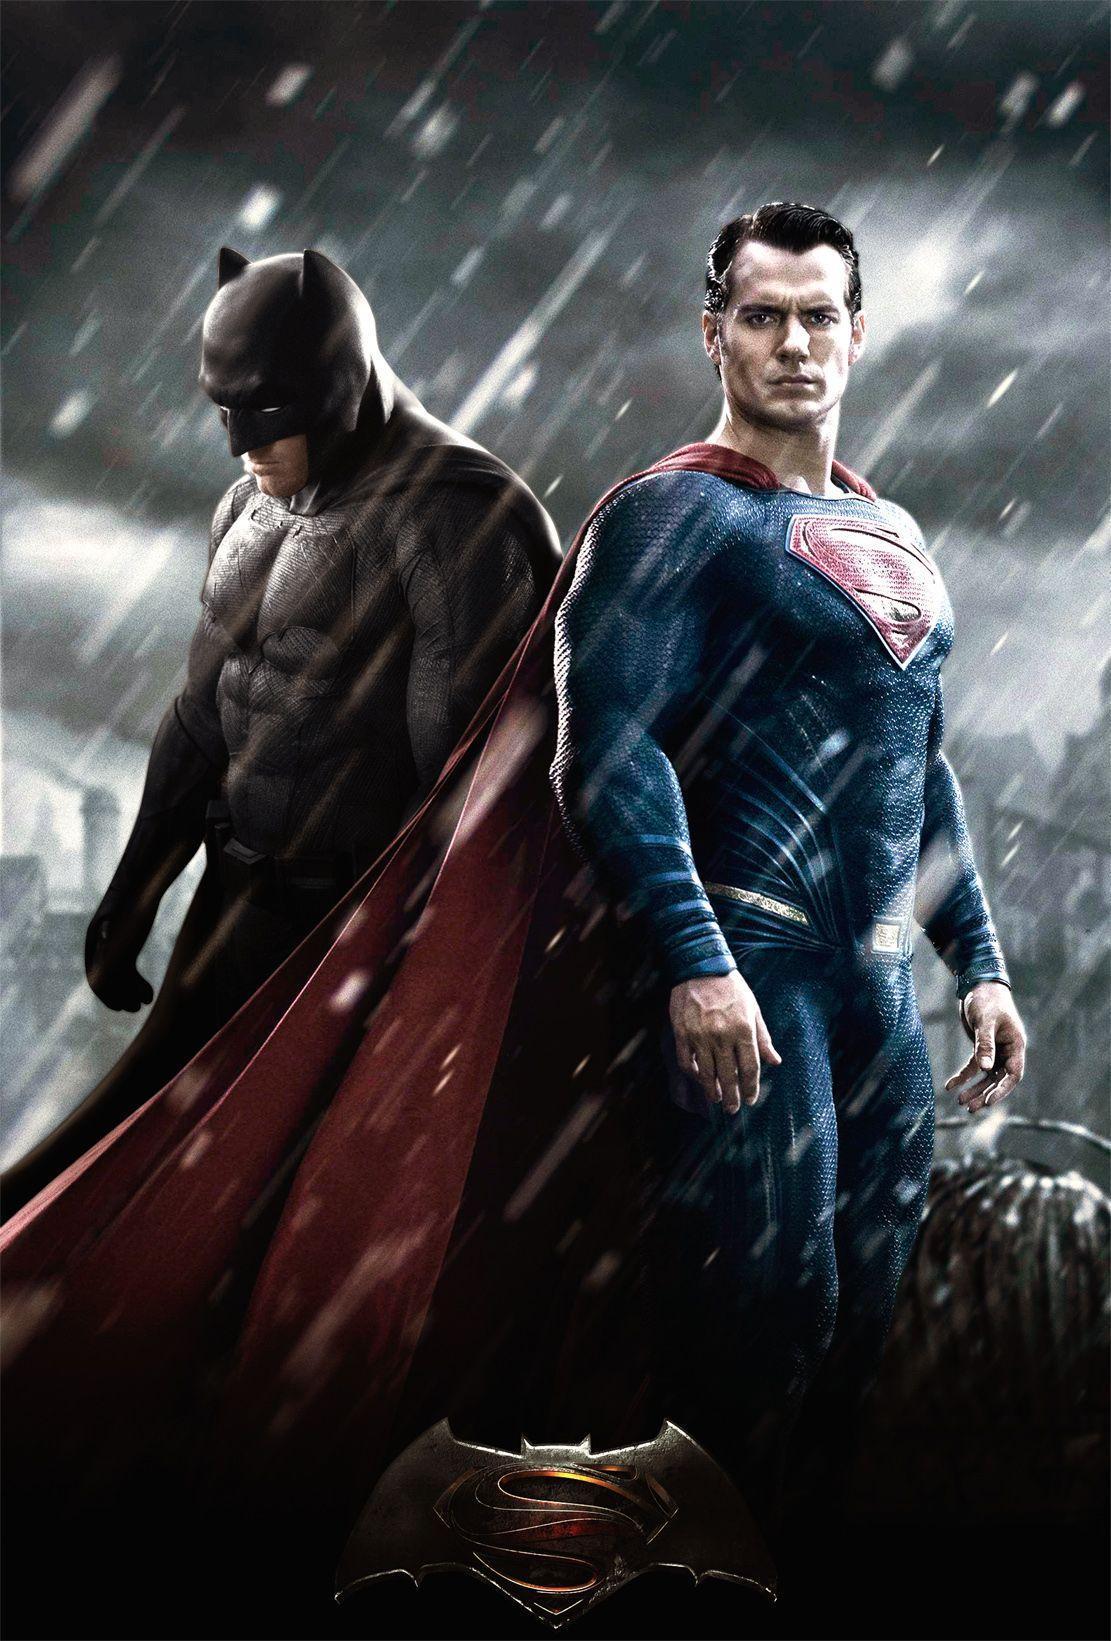 Phone Batman vs Superman Wallpaper. Full HD Picture. Download